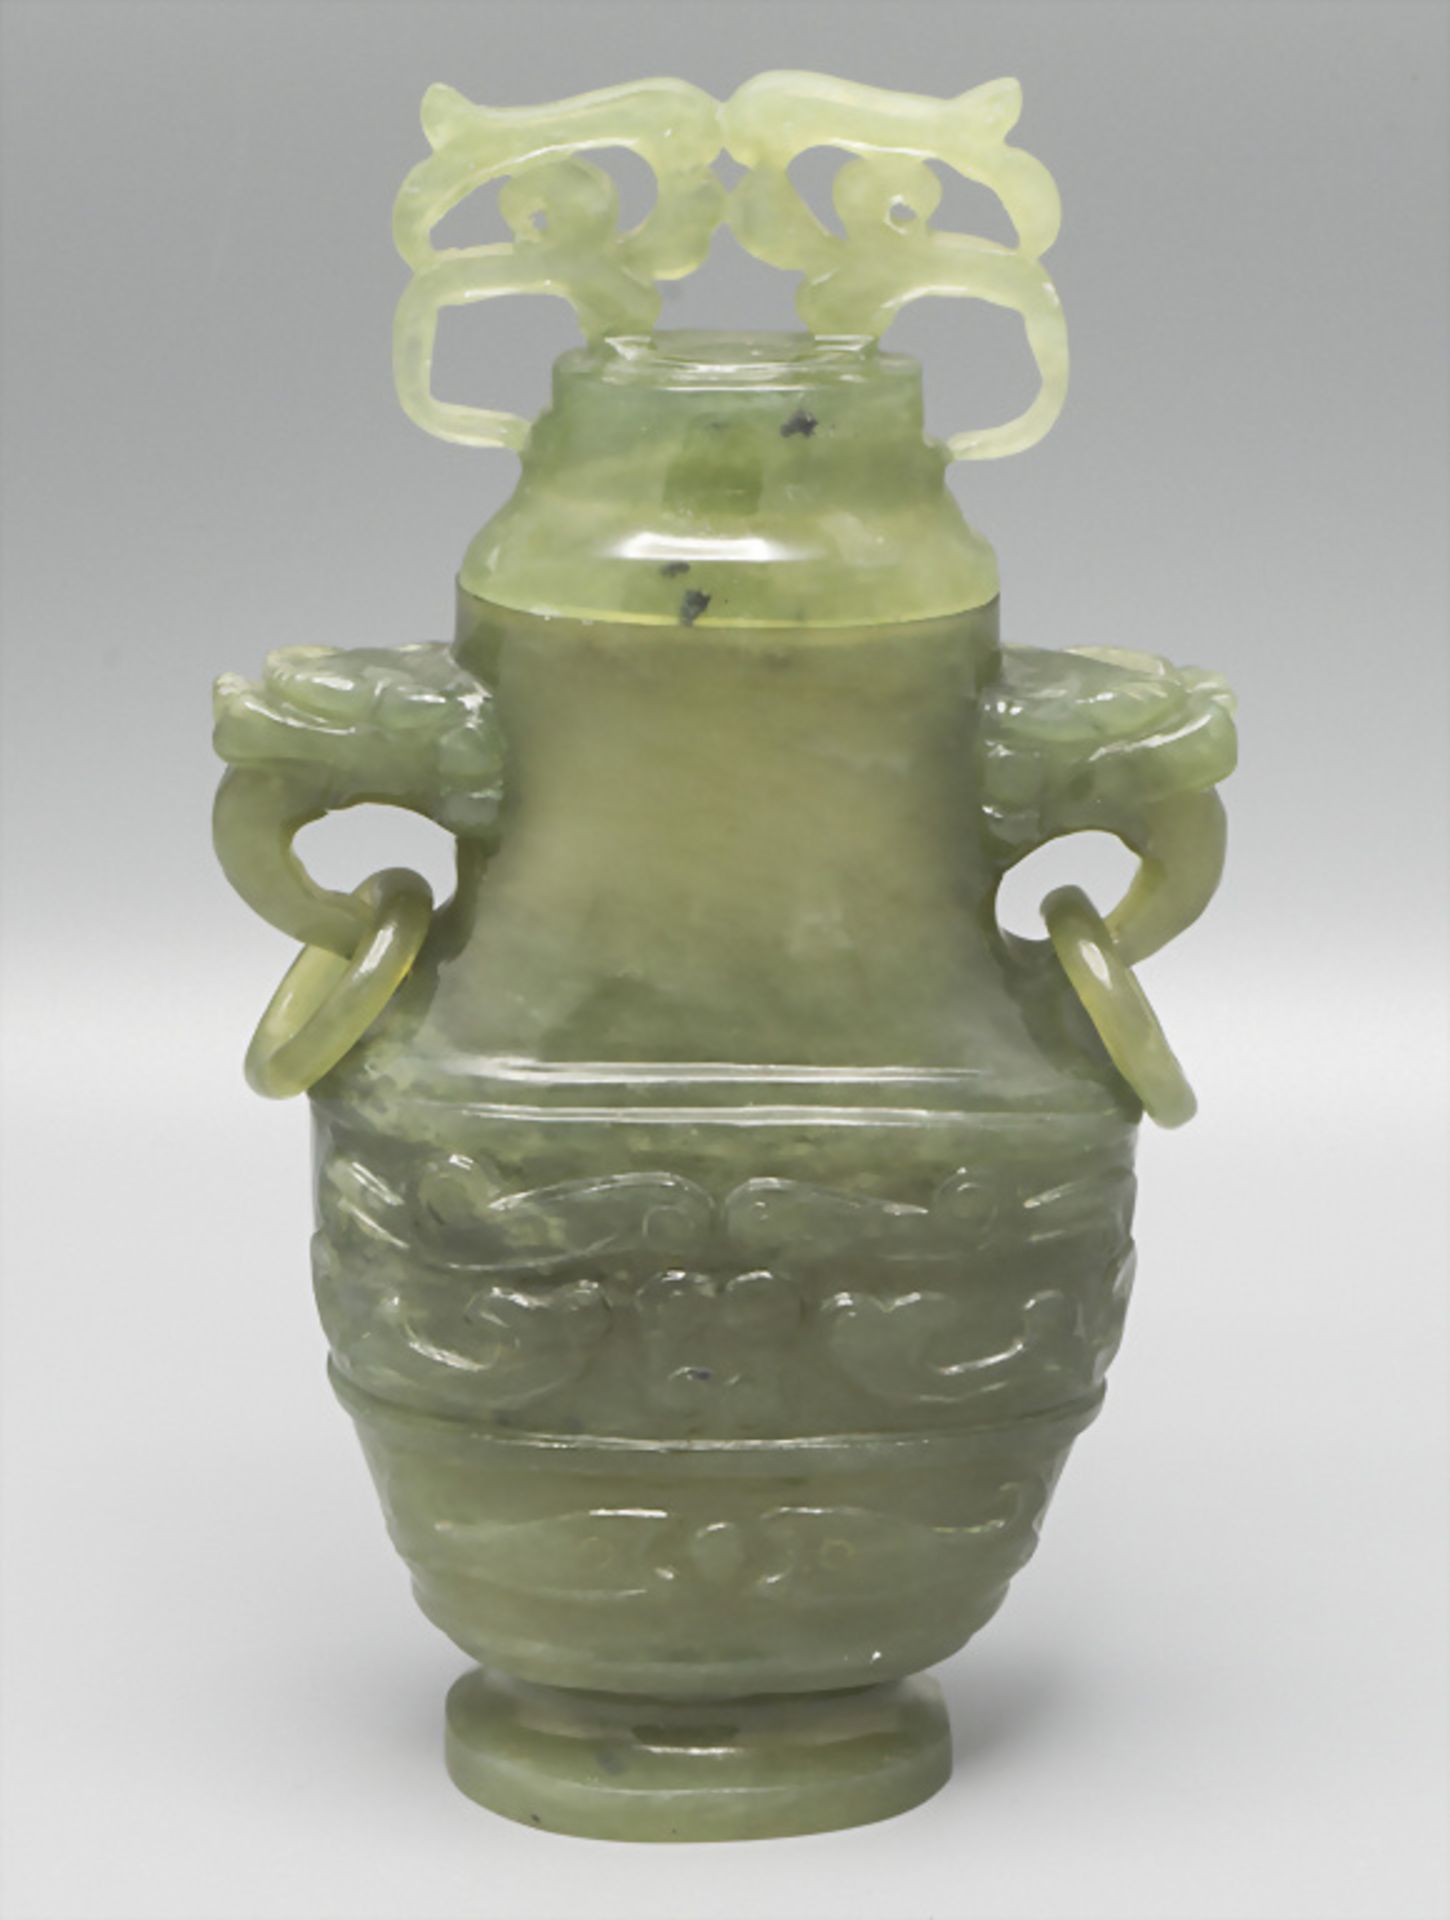 Jade-Deckelvase / A jade vase with cover, China, späte Qing-Dynastie (1644-1911)